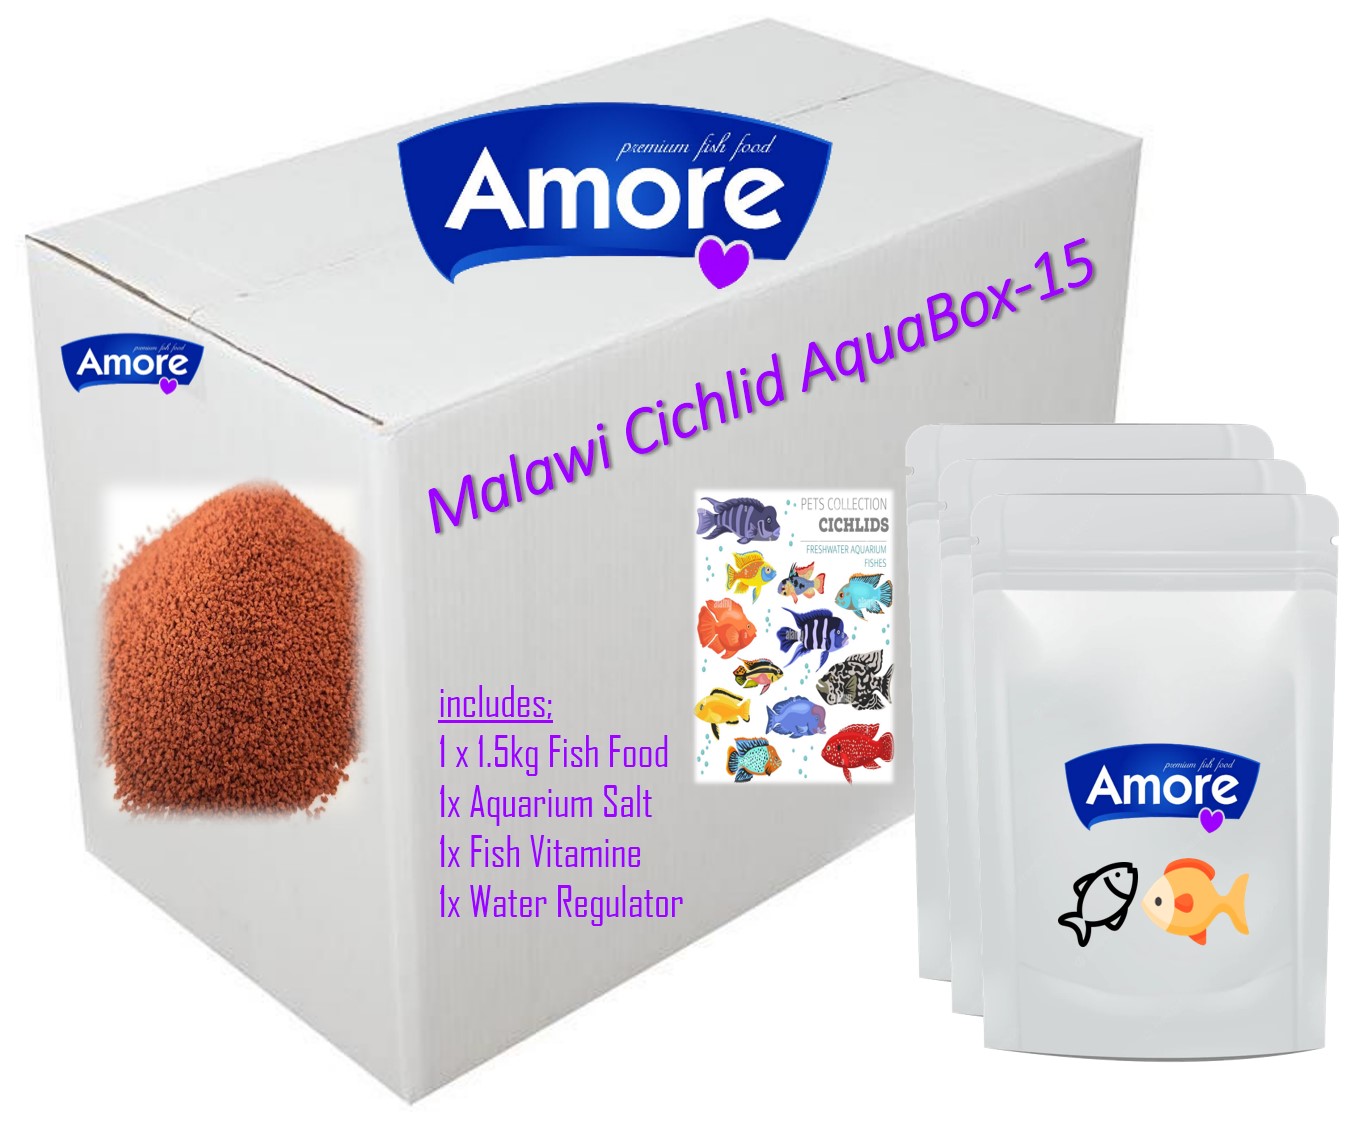 Amore Cichlid Red Granules Balık Yemi 1.5kg Ve Akvaryum Bakım Seti Aquabox-15